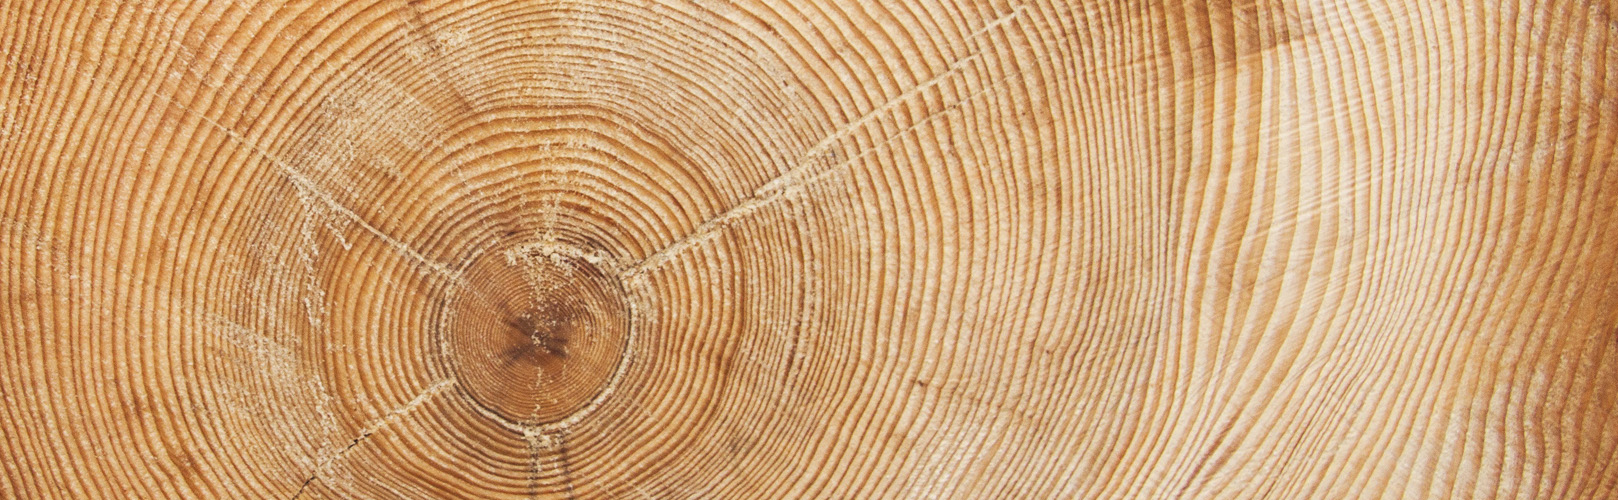 Wood Analysis Instrumentation